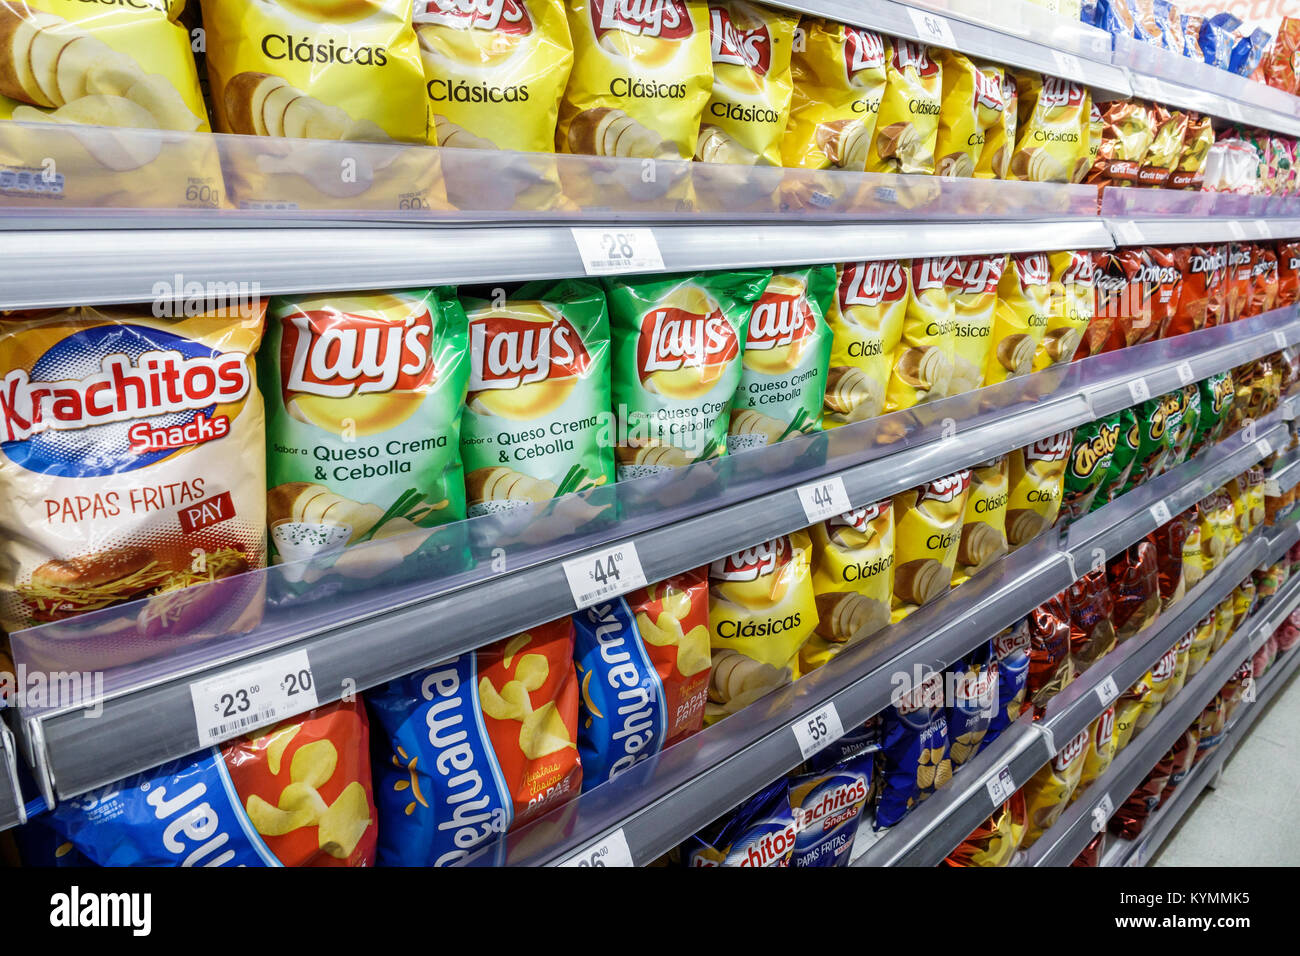 Buenos Aires Argentina,Palermo,Express,convenience store,market,display,snacks,potato chips,Lays,Hispanic,ARG171119198 Stock Photo